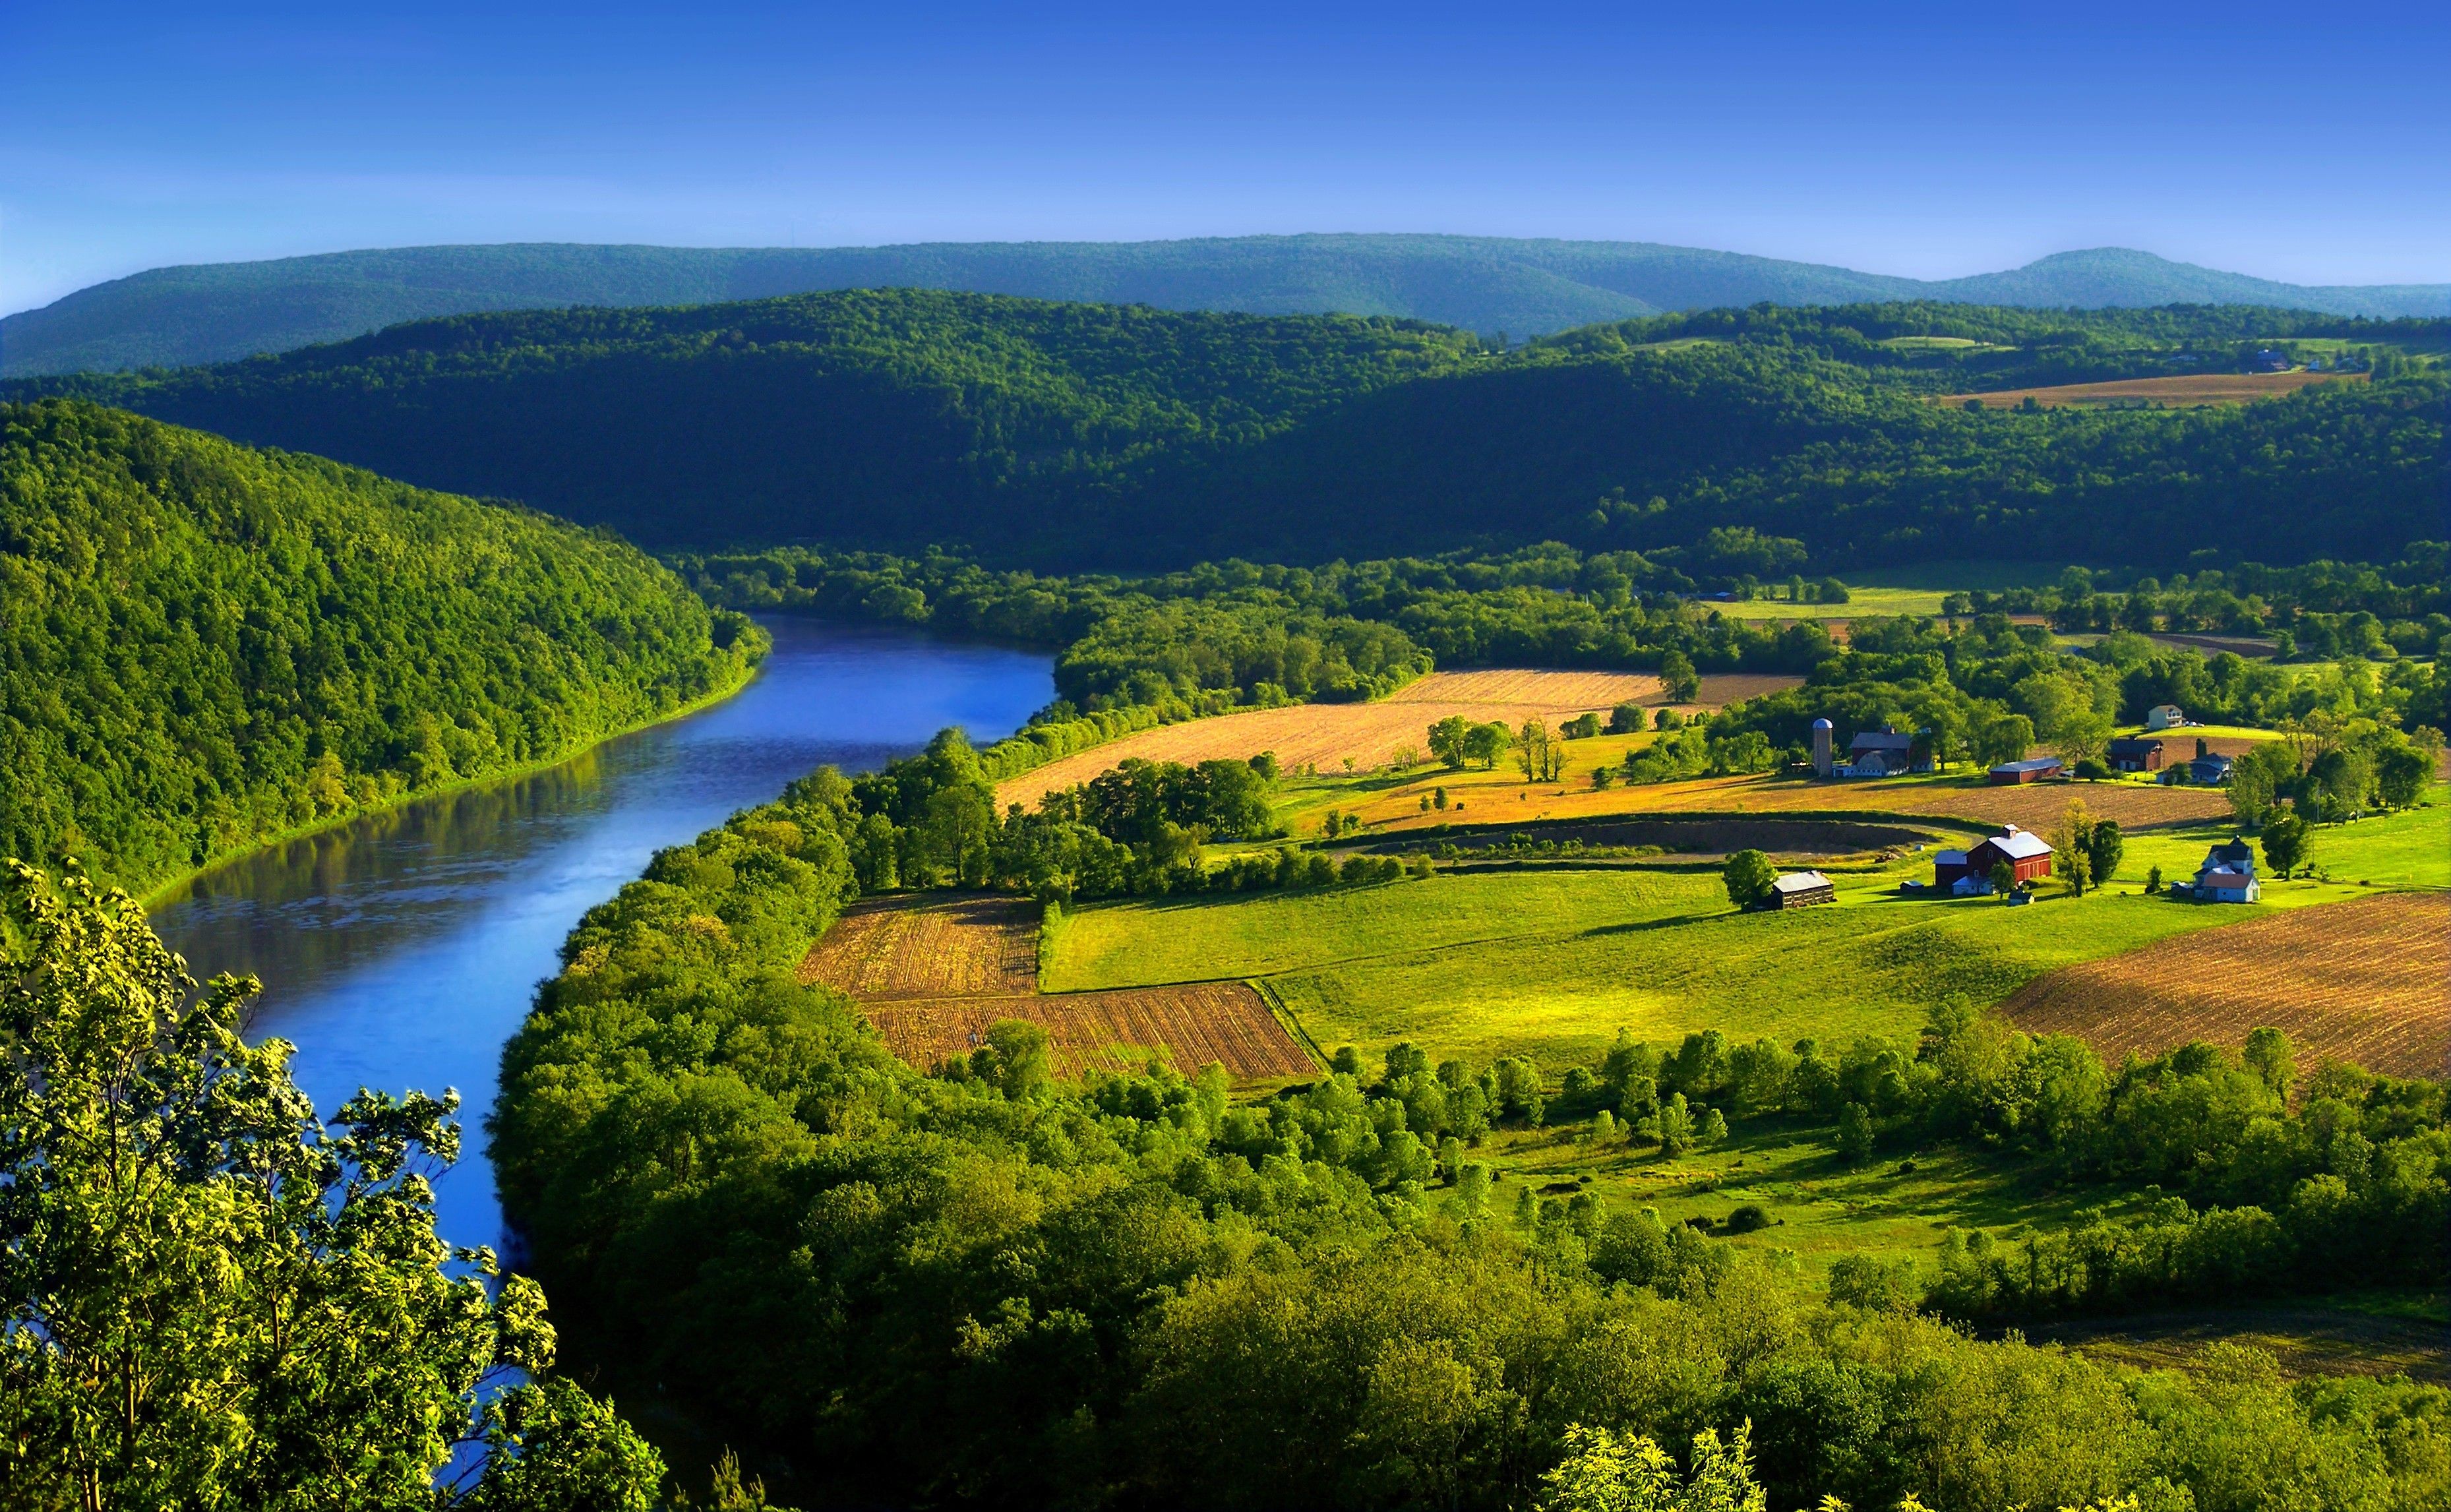 River: Green Morning Beautiful Hills River Pennsylvania